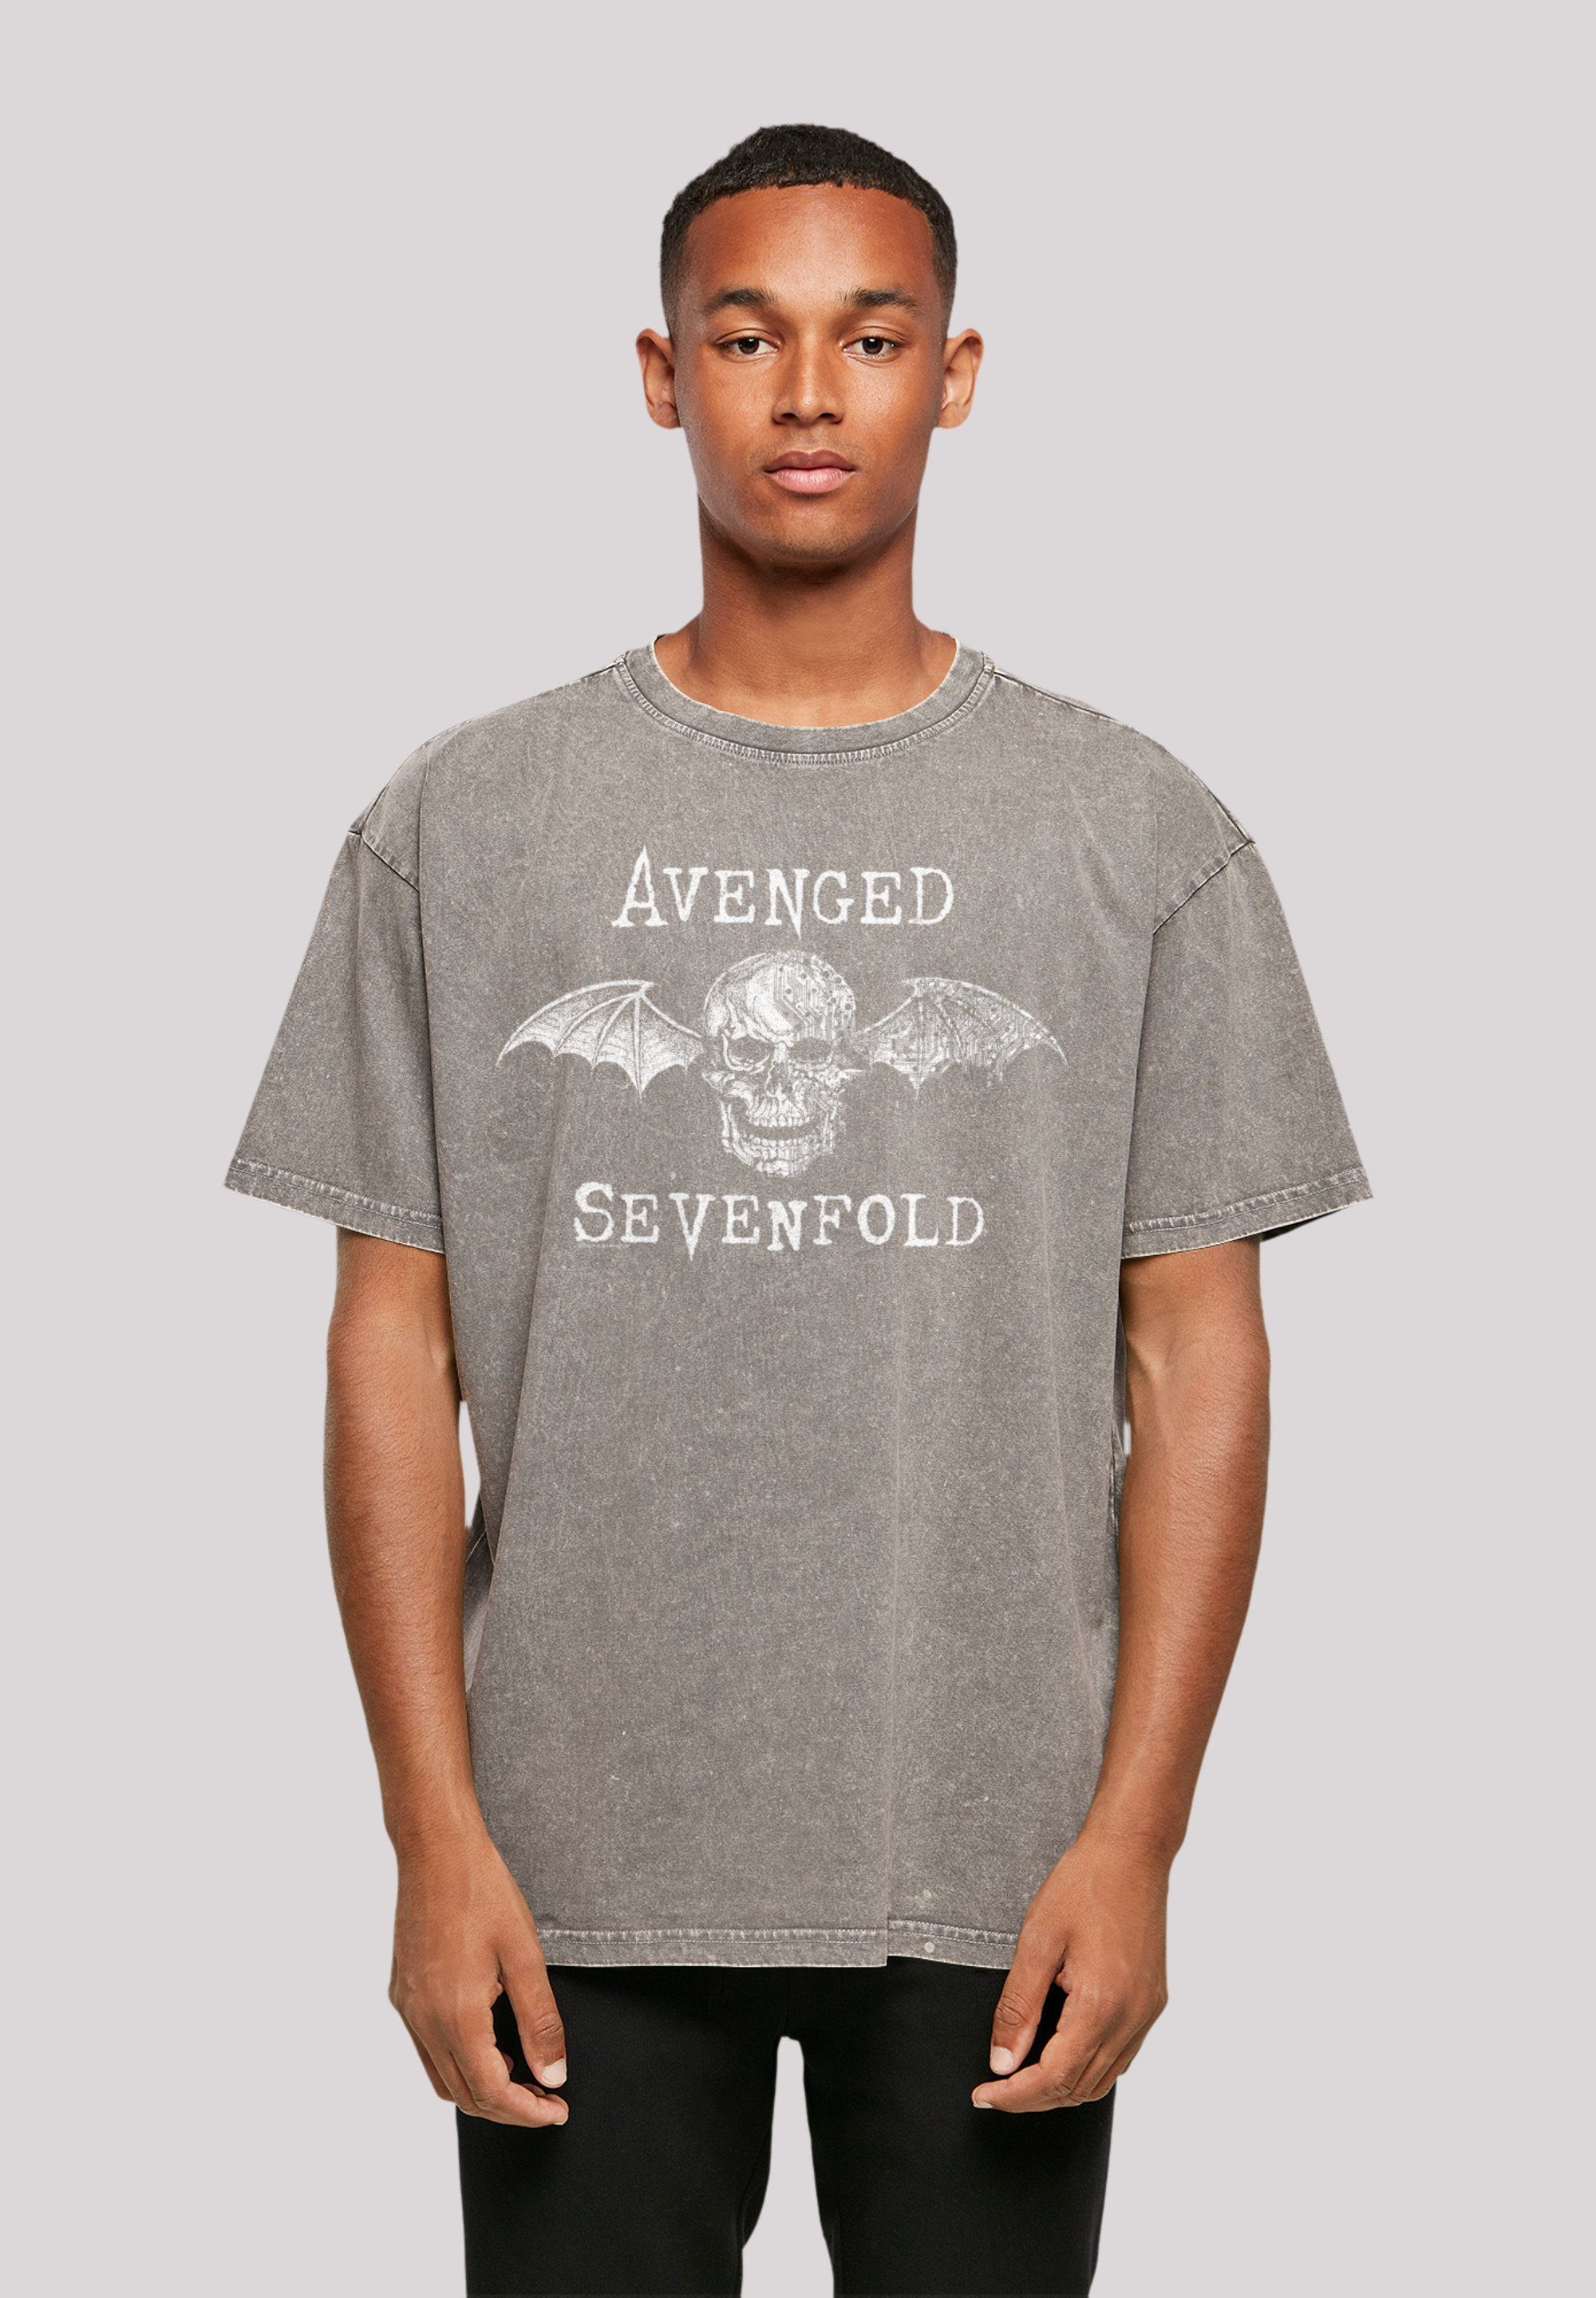 F4NT4STIC T-Shirt Avenged Sevenfold Rock Metal Band Cyborg Bat Premium Qualität, Band, Rock-Musik Asphalt